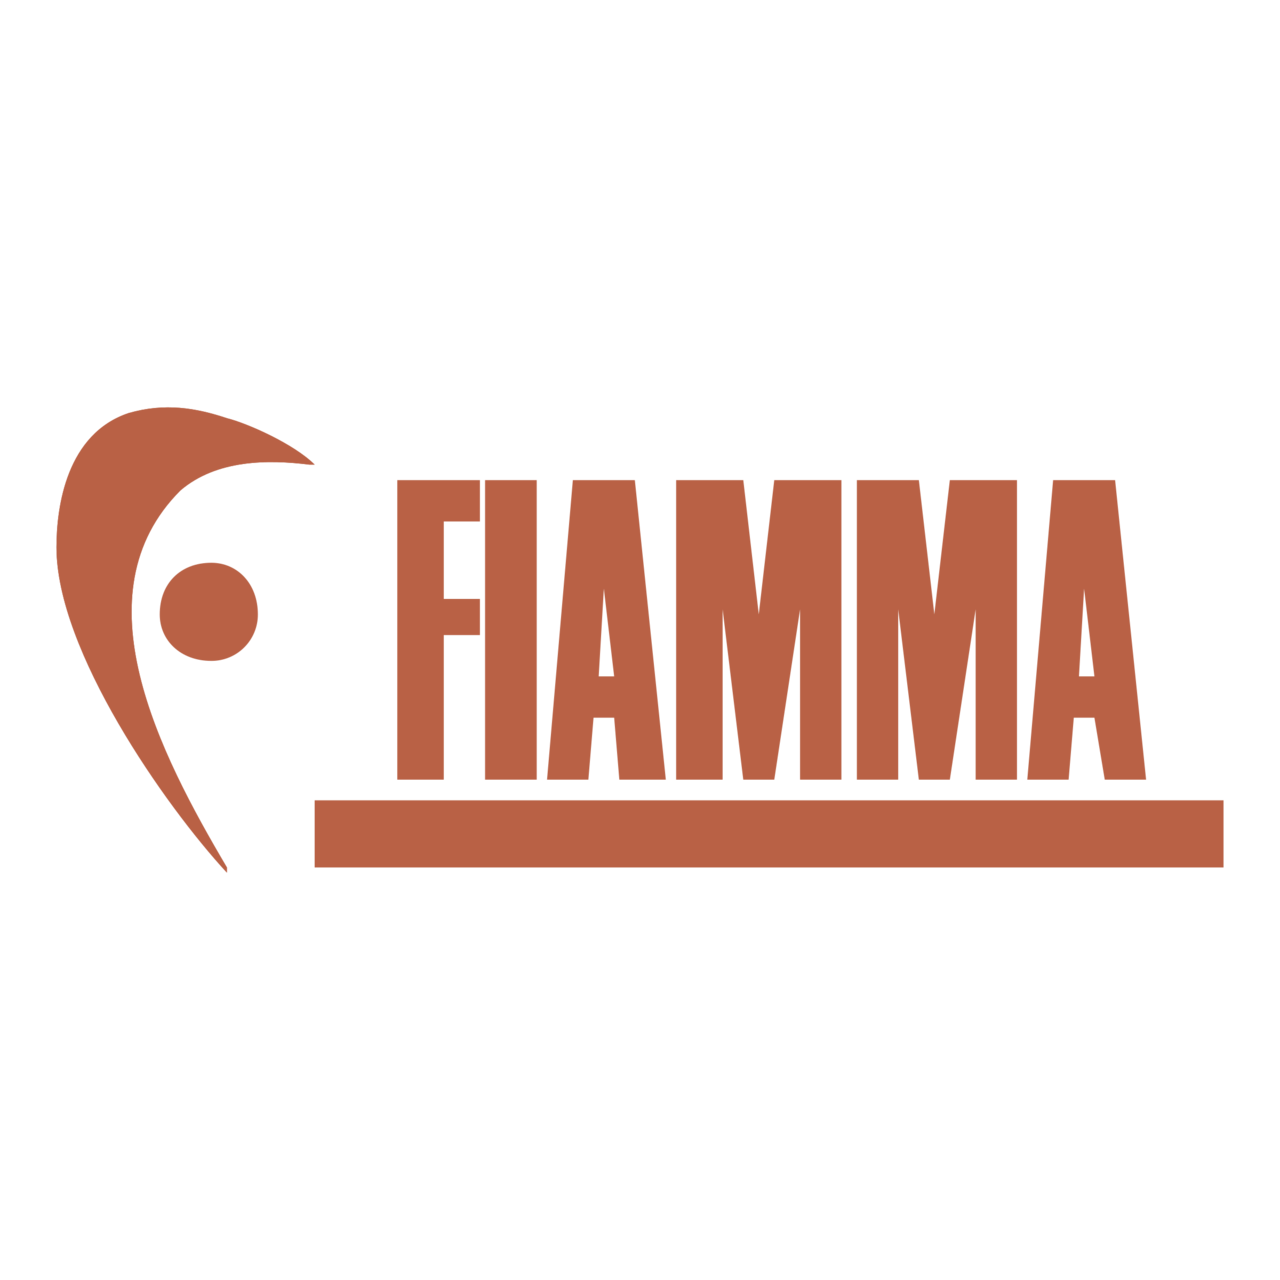 Fiamma Bike Racks